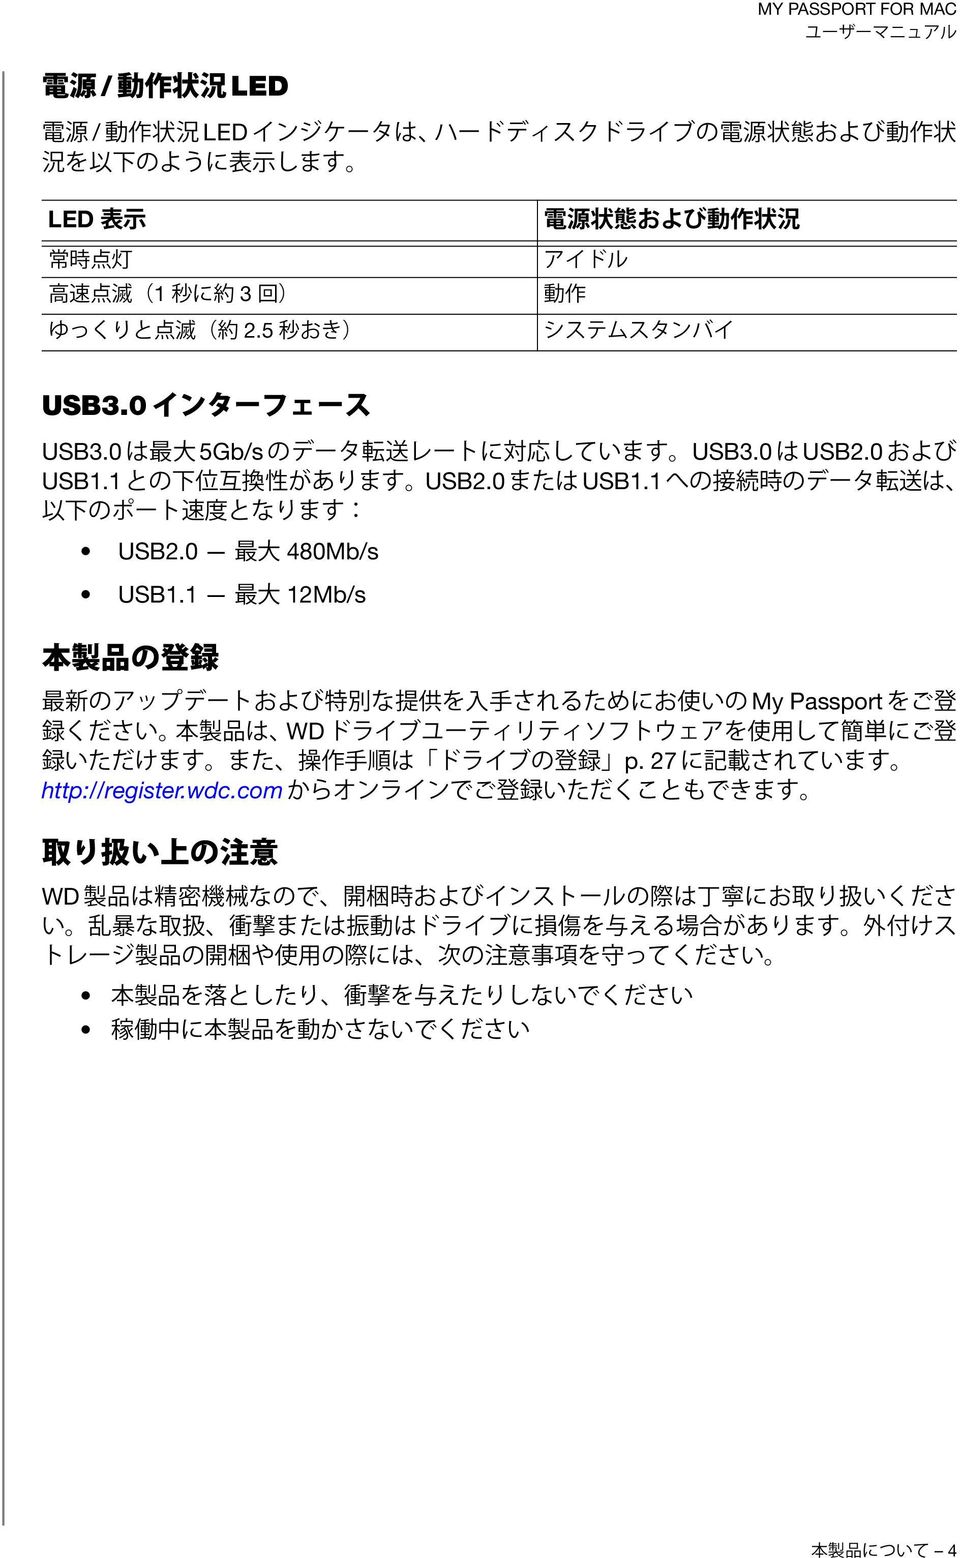 0 USB1.1 USB2.0 480Mb/s USB1.